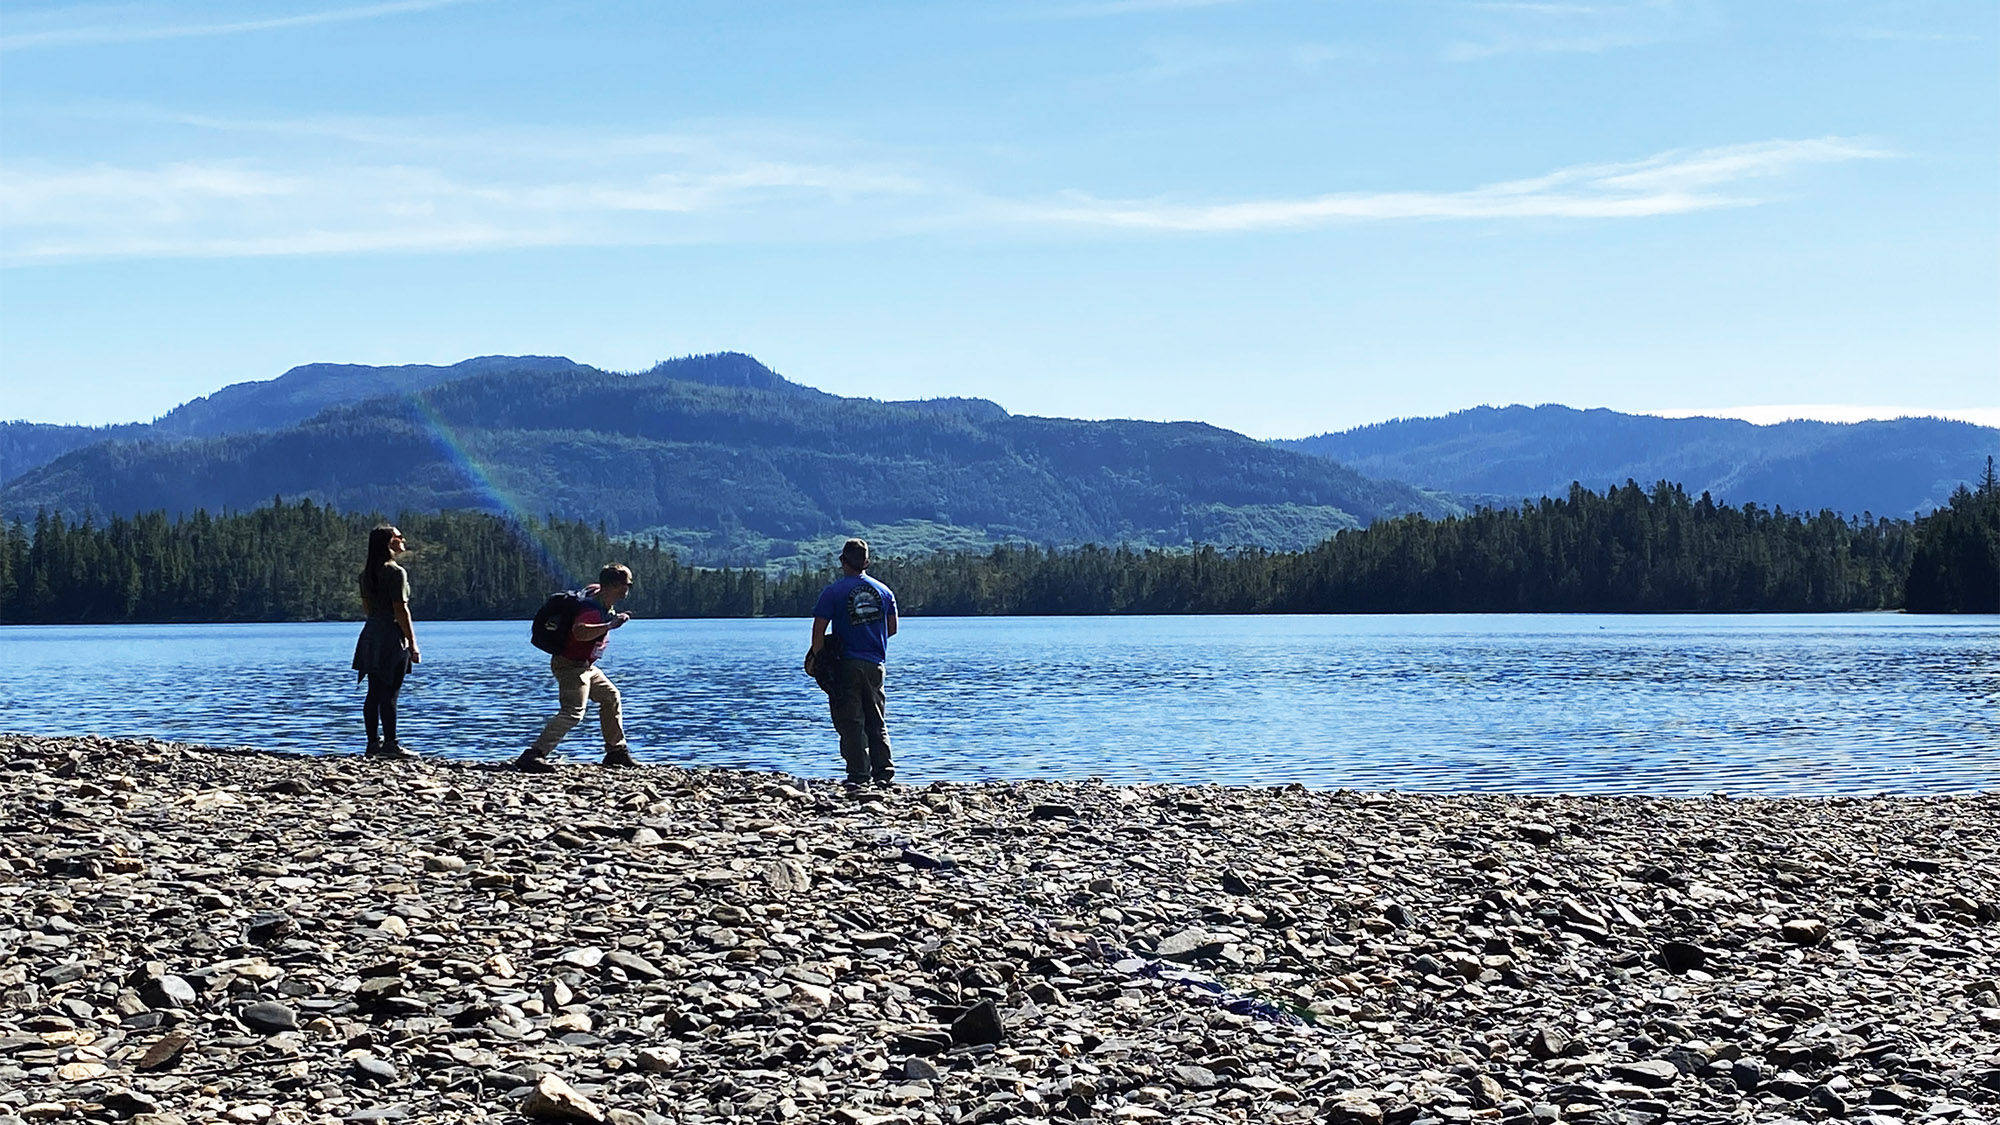 Guests on a Princess Cruises excursion skipping rocks on Mahoney Lake after a bumpy ATV ride.